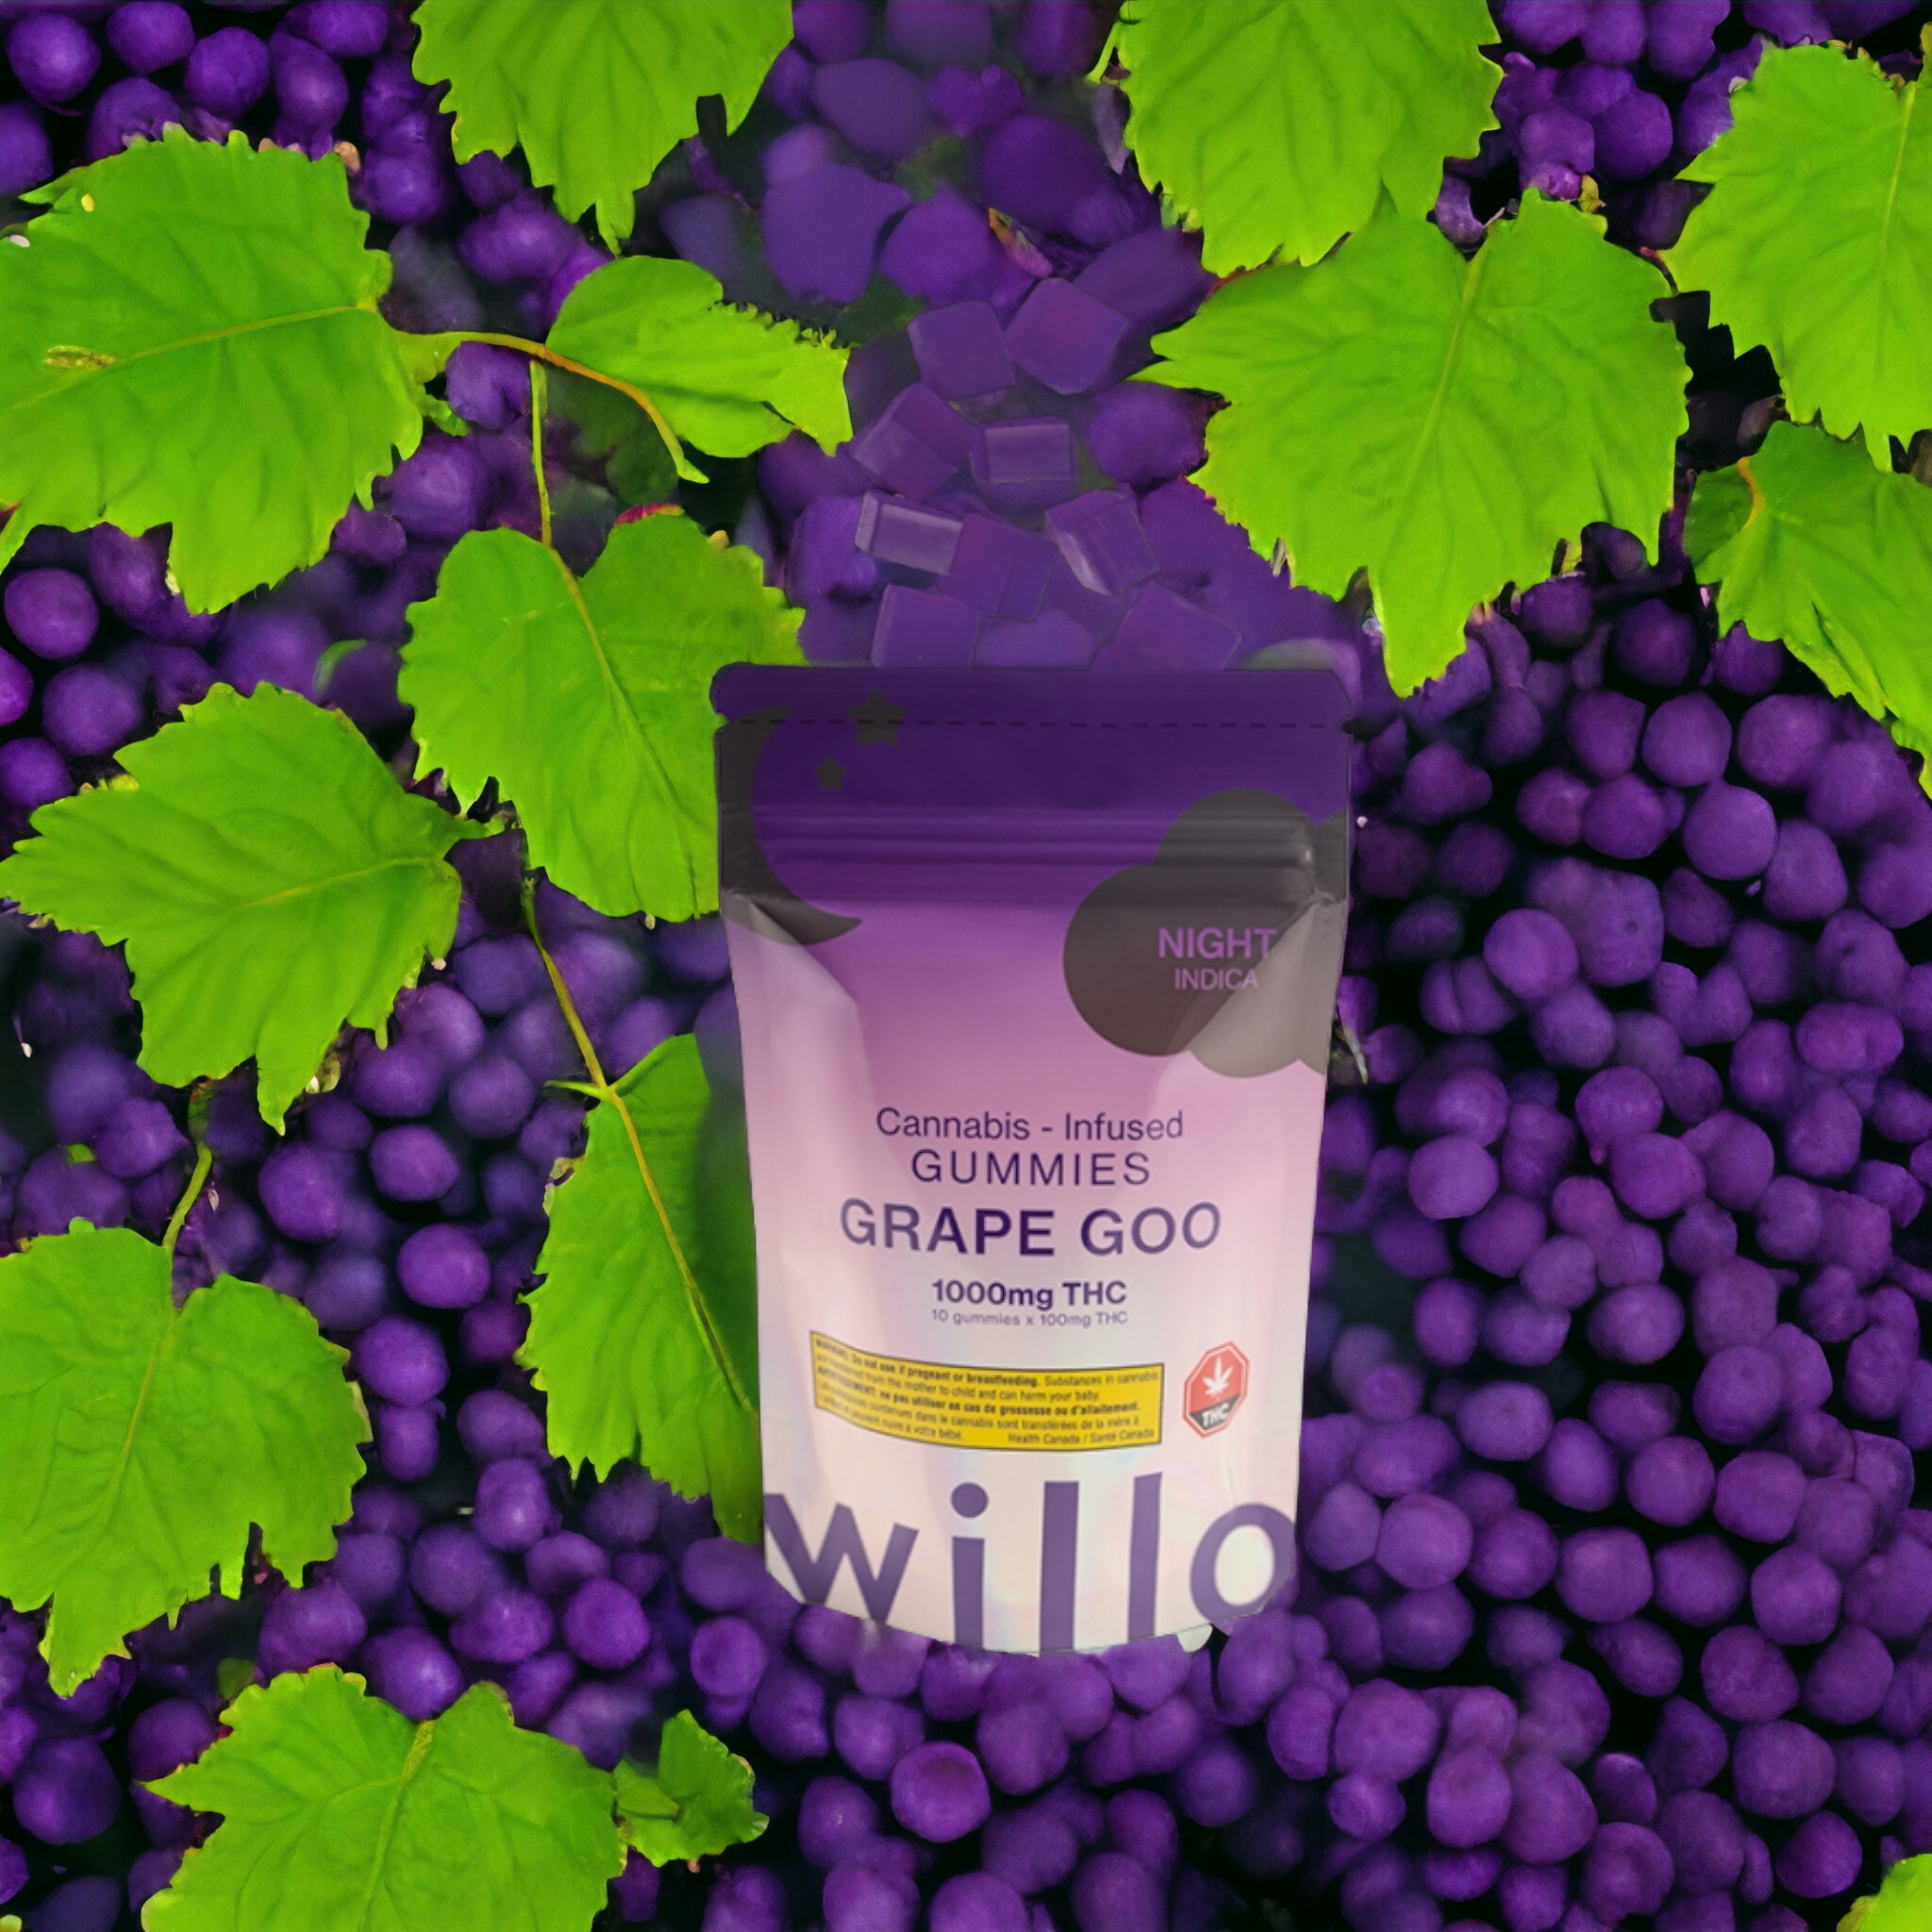 Willo – 1000mg THC Grape Goo (Night) Gummies